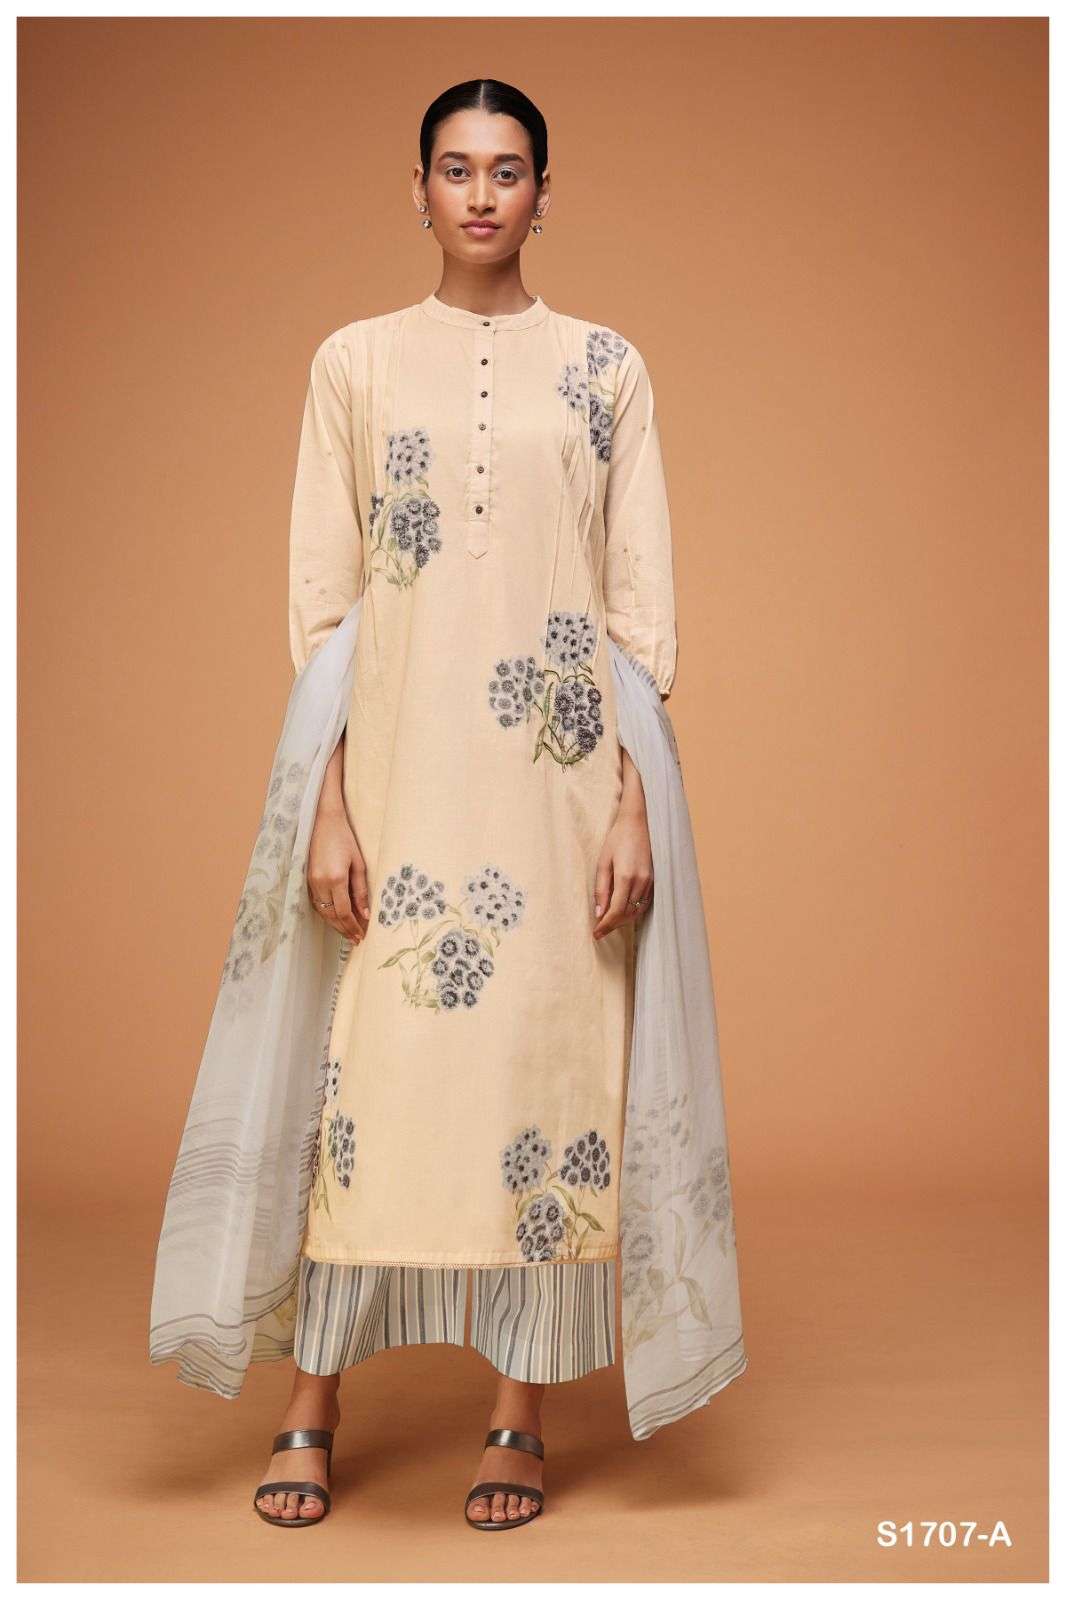 ganga verena 1707 series cotton designer salwar kameez catalogue wholesale price surat